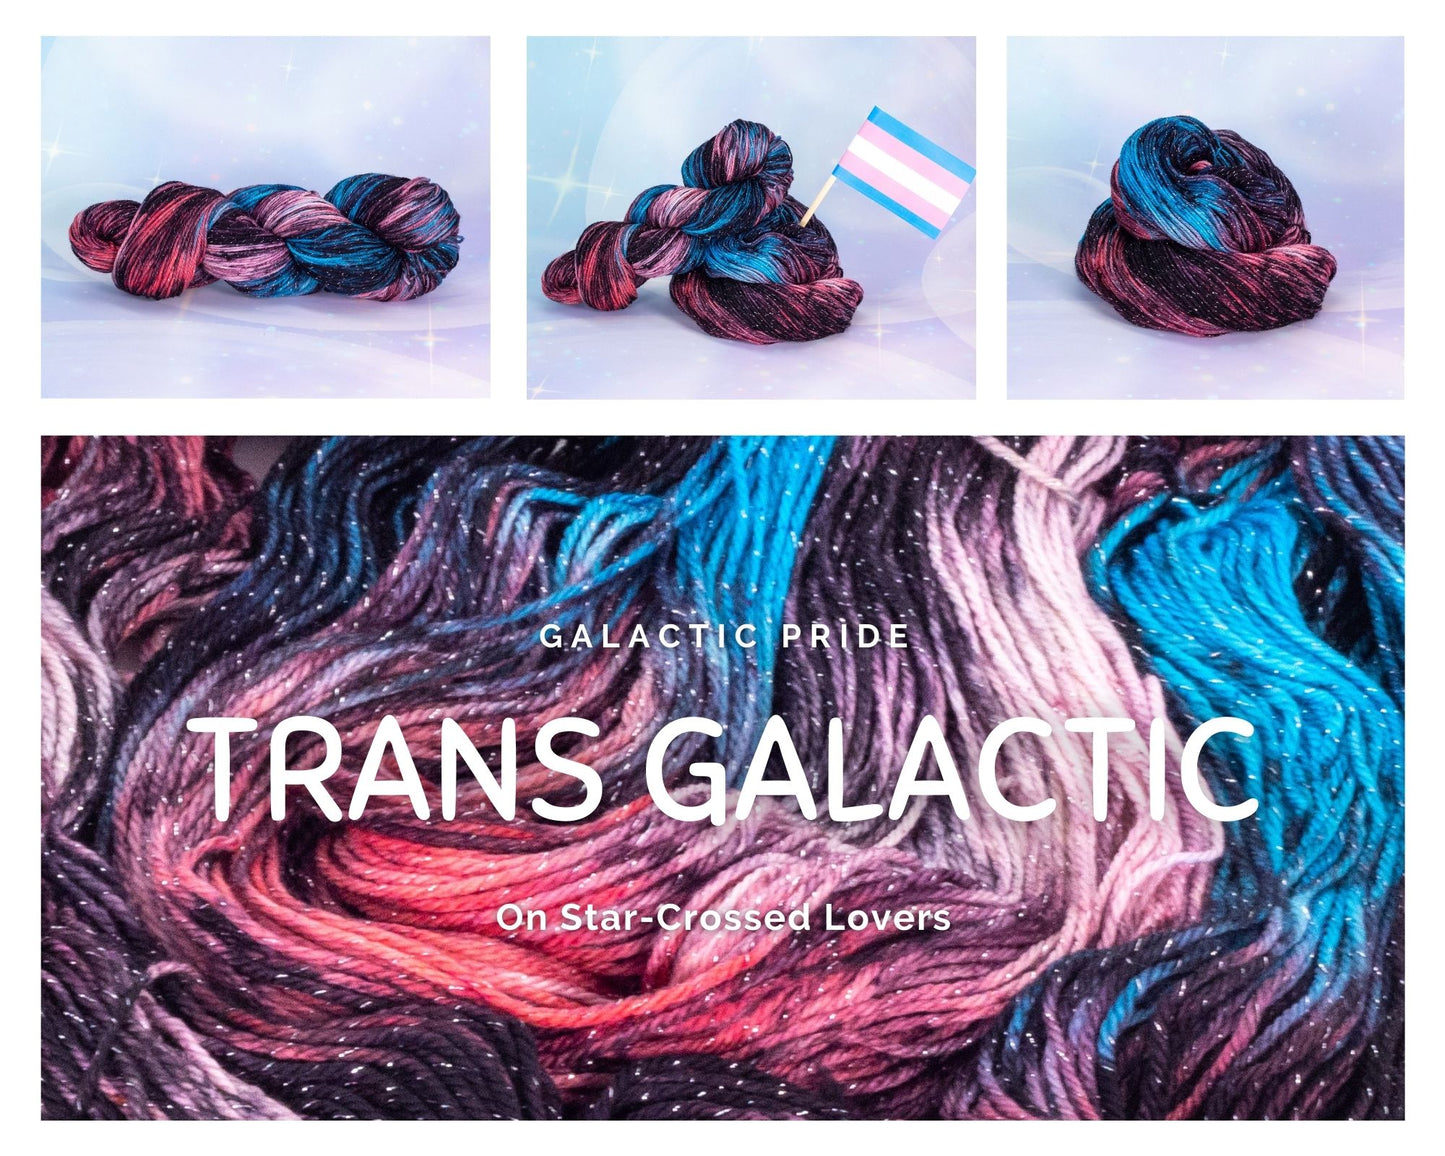 Trans Galactic